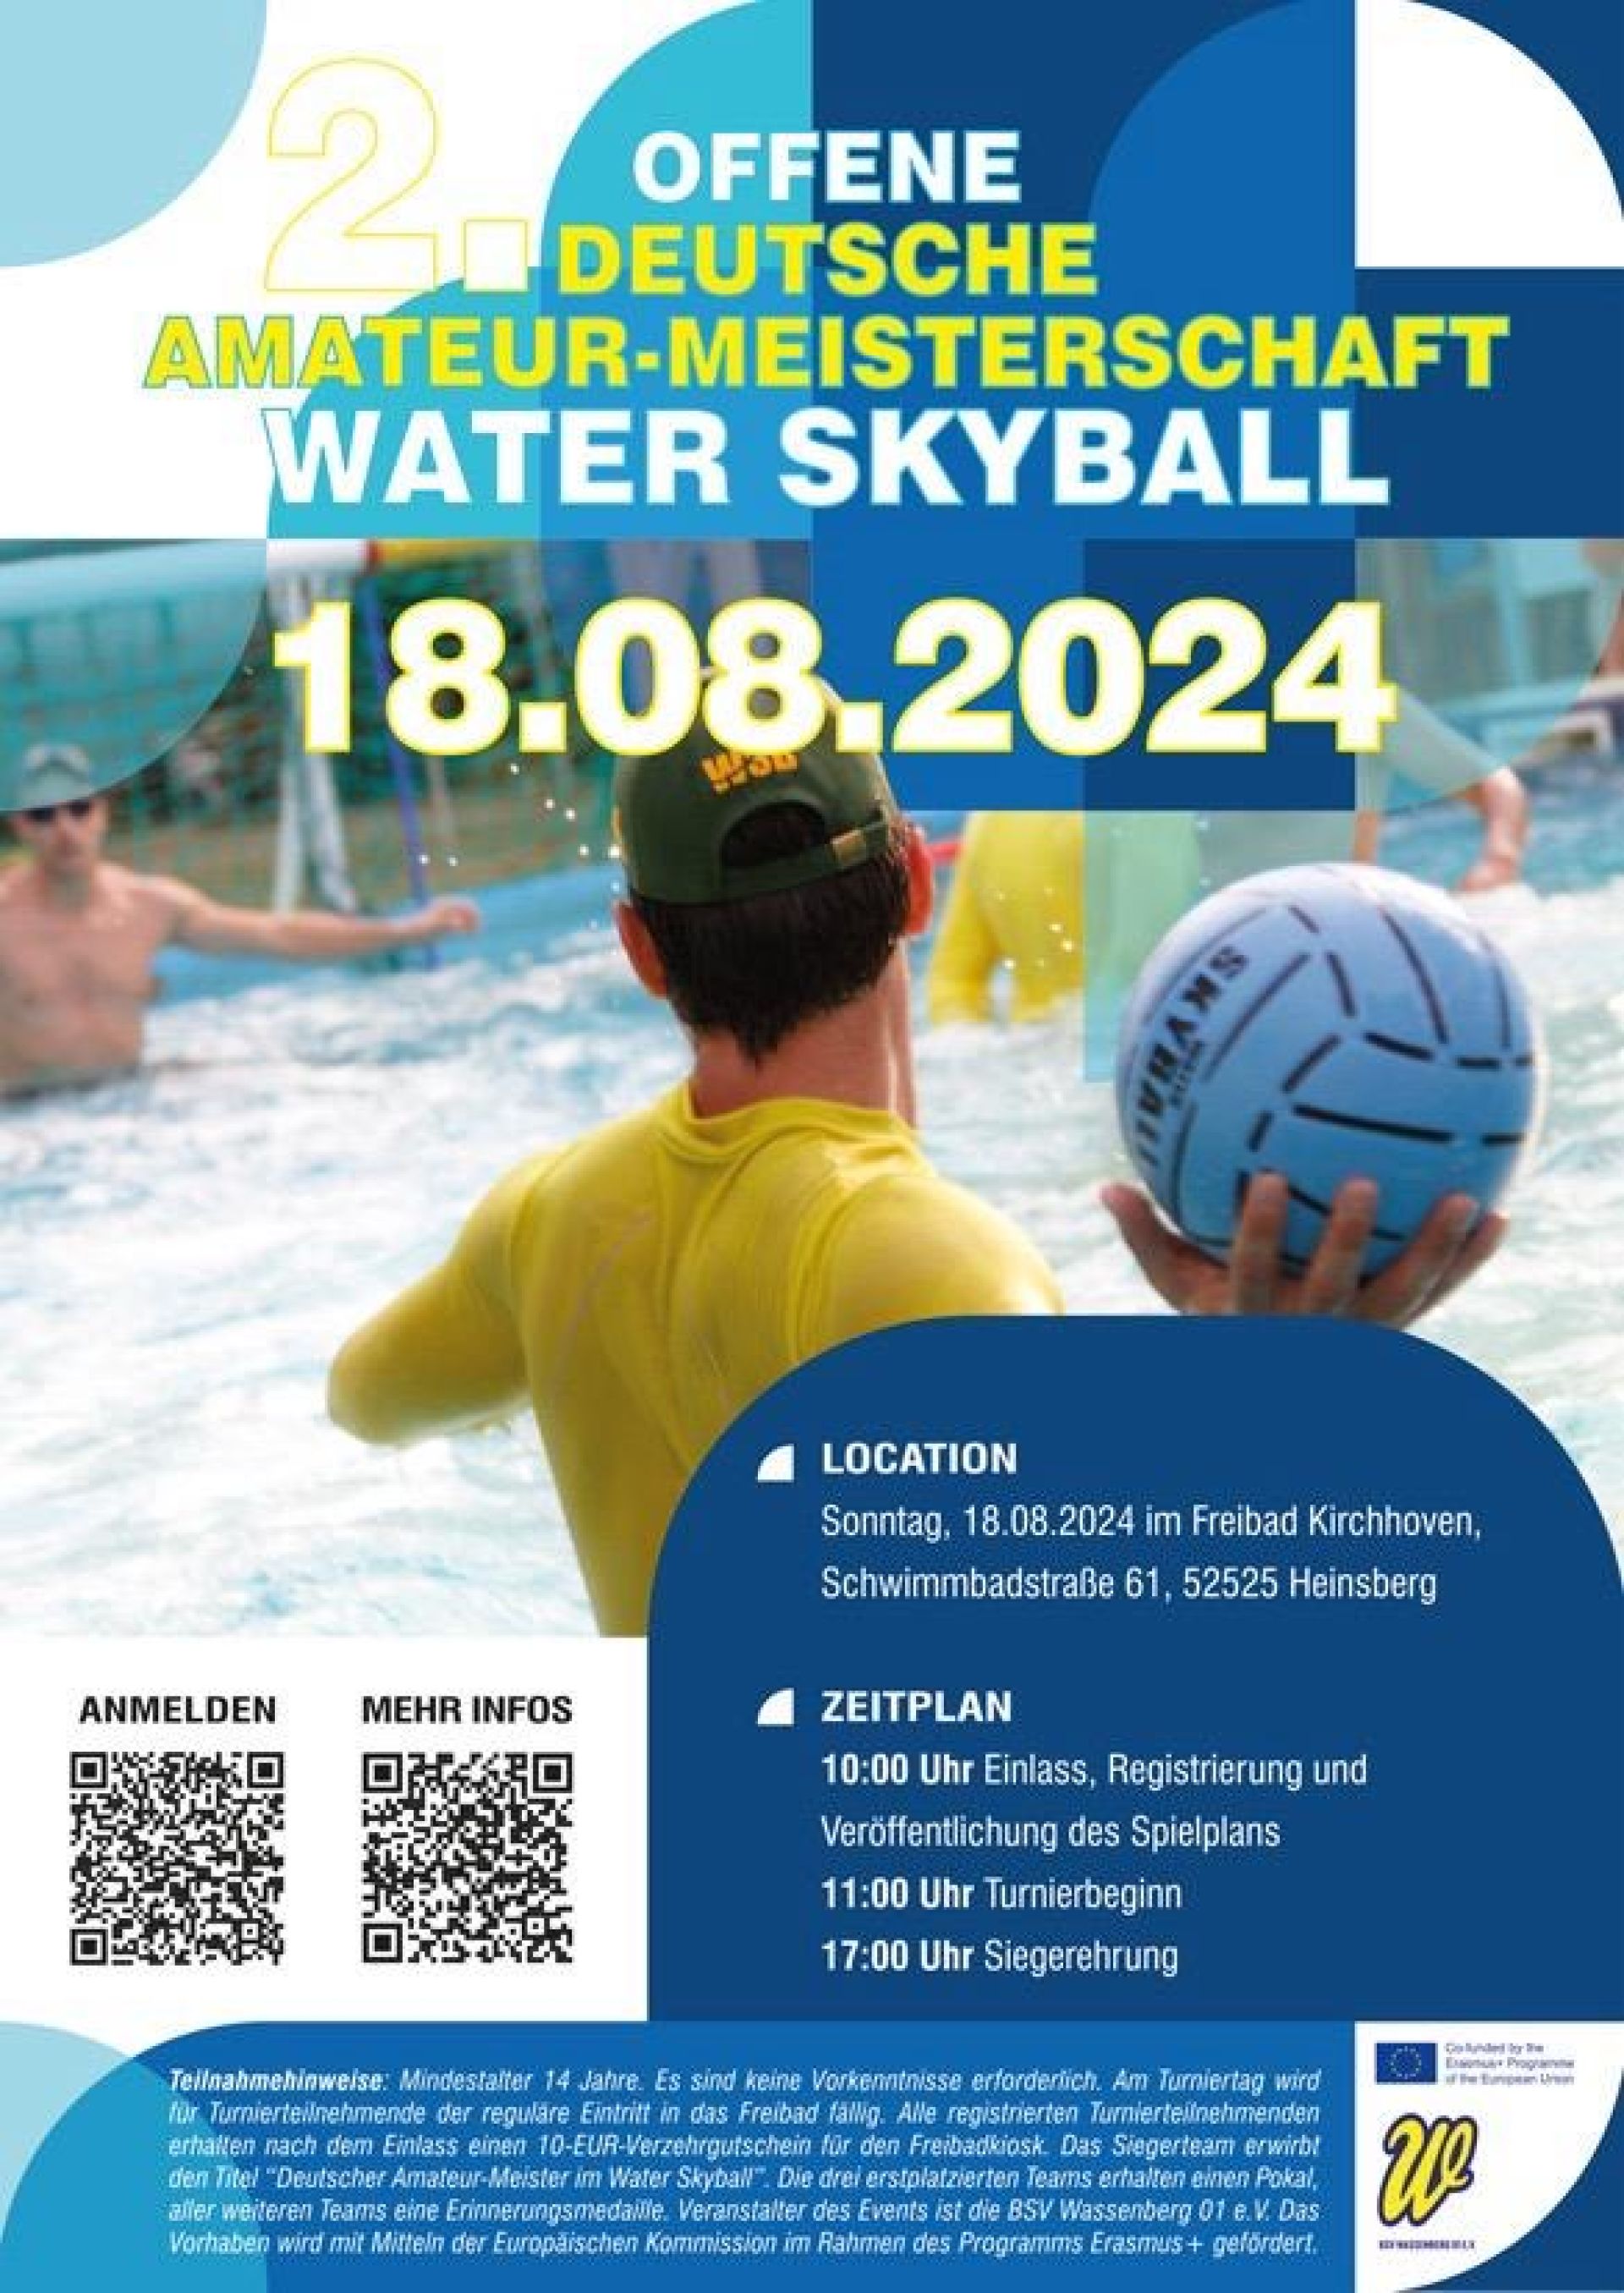 Water Skyball - Event und offene Meisterschaft in Heinsberg-Kirchhoven